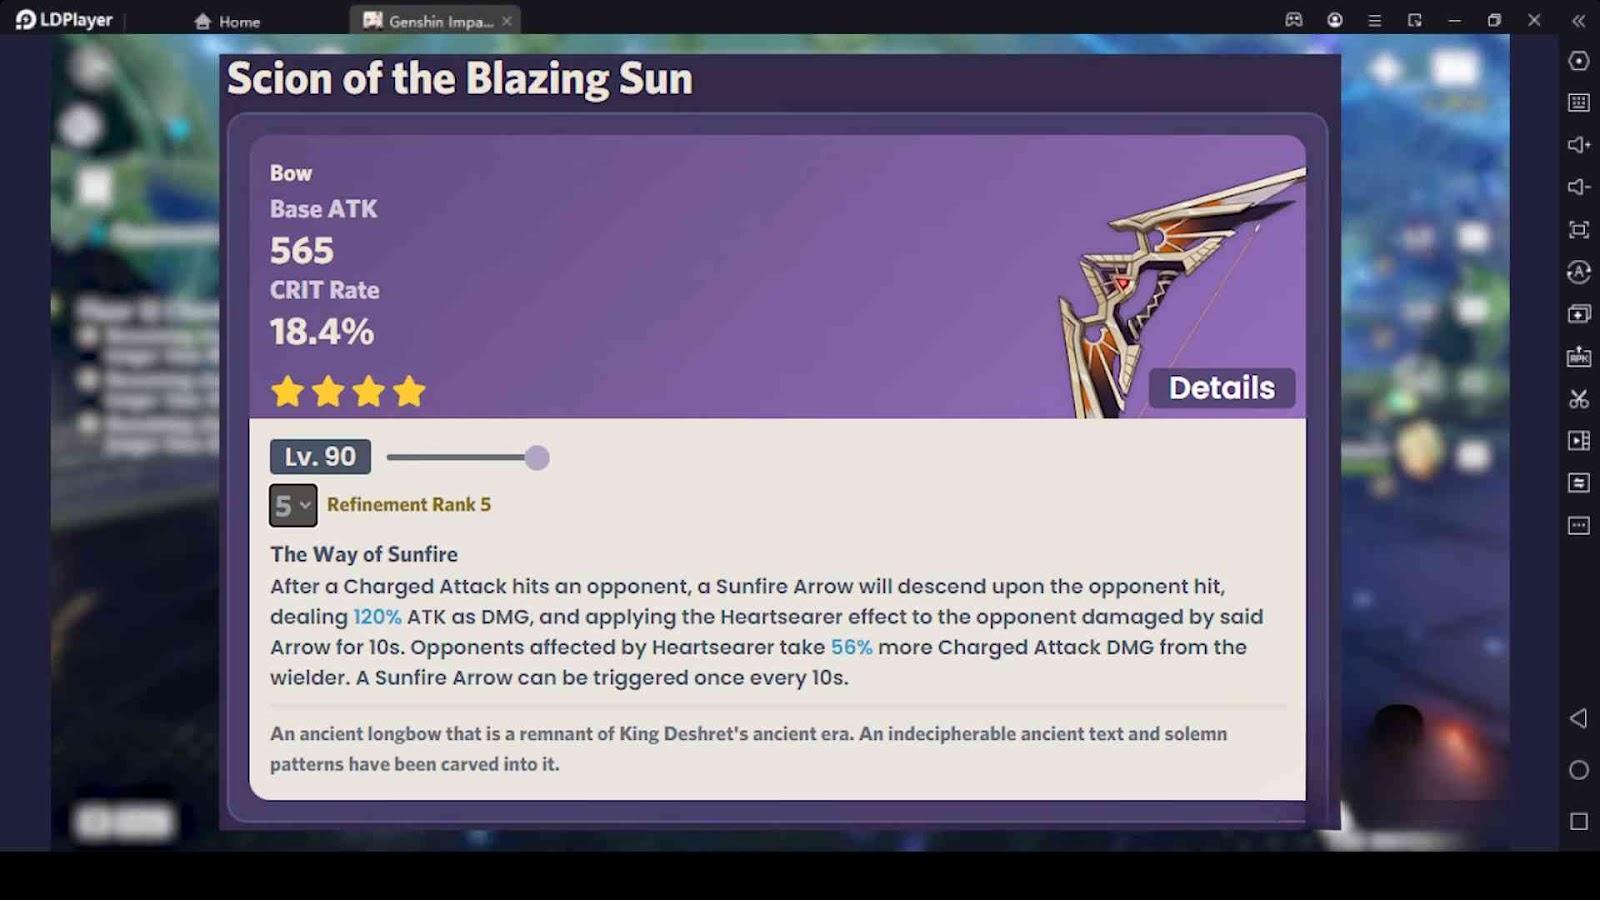 Scion of the Blazing Sun